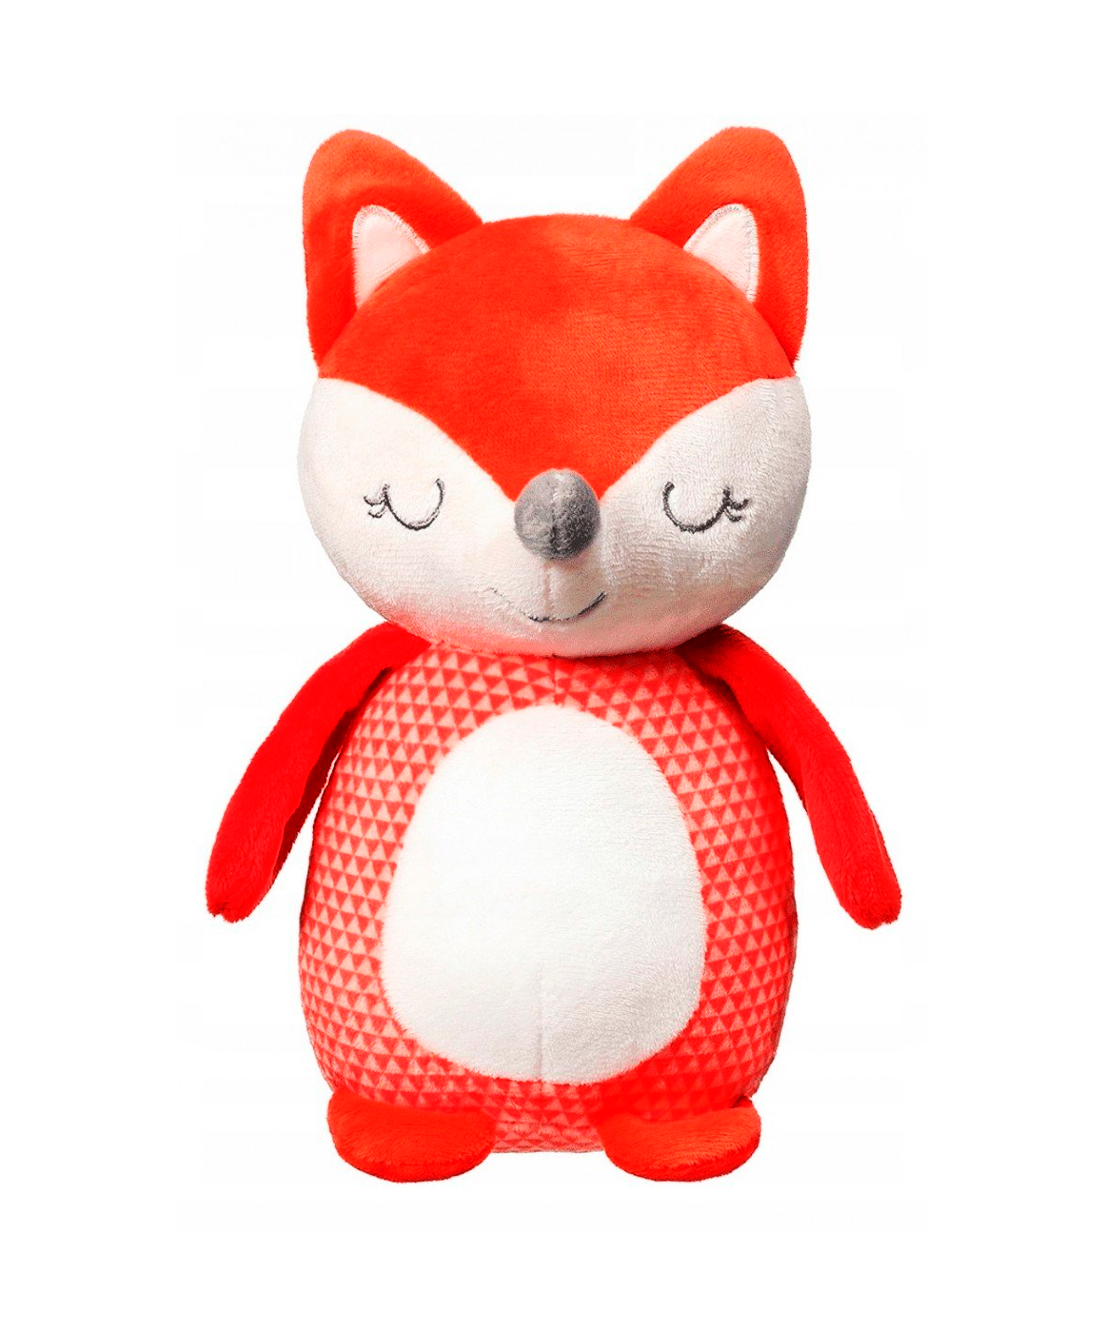 Fox stuffed animal